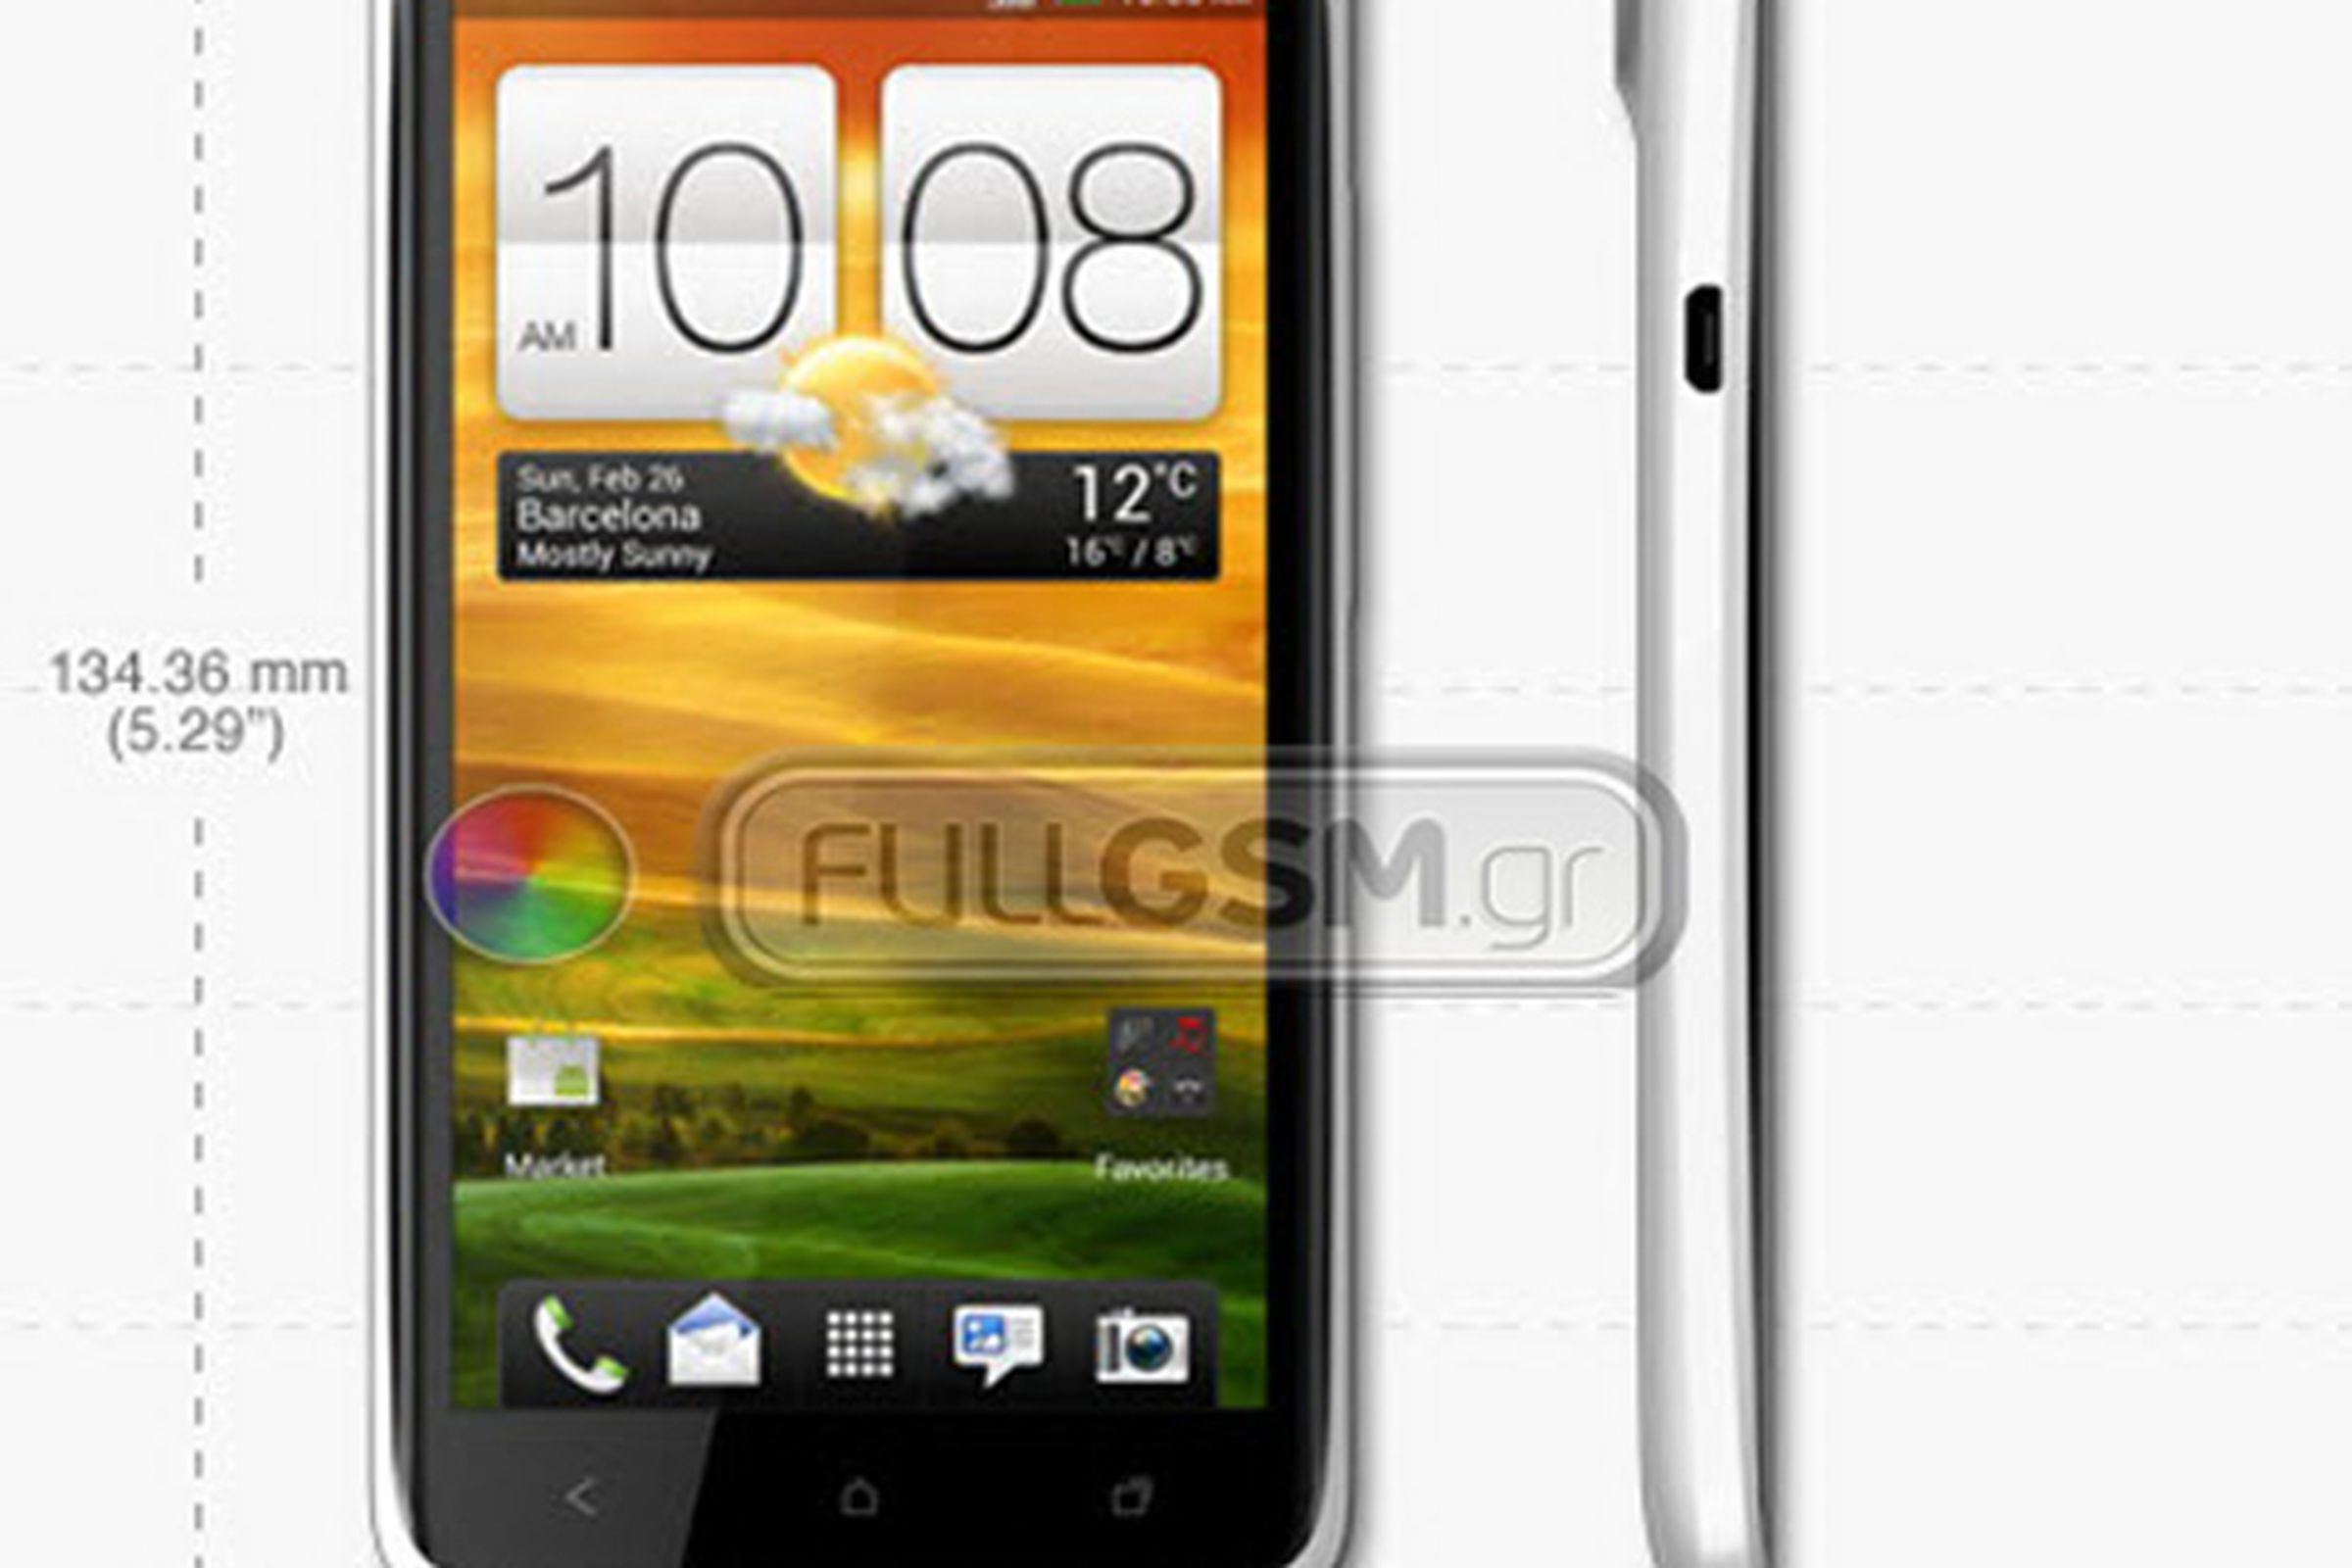 HTC One X Leaked Image FullGSM